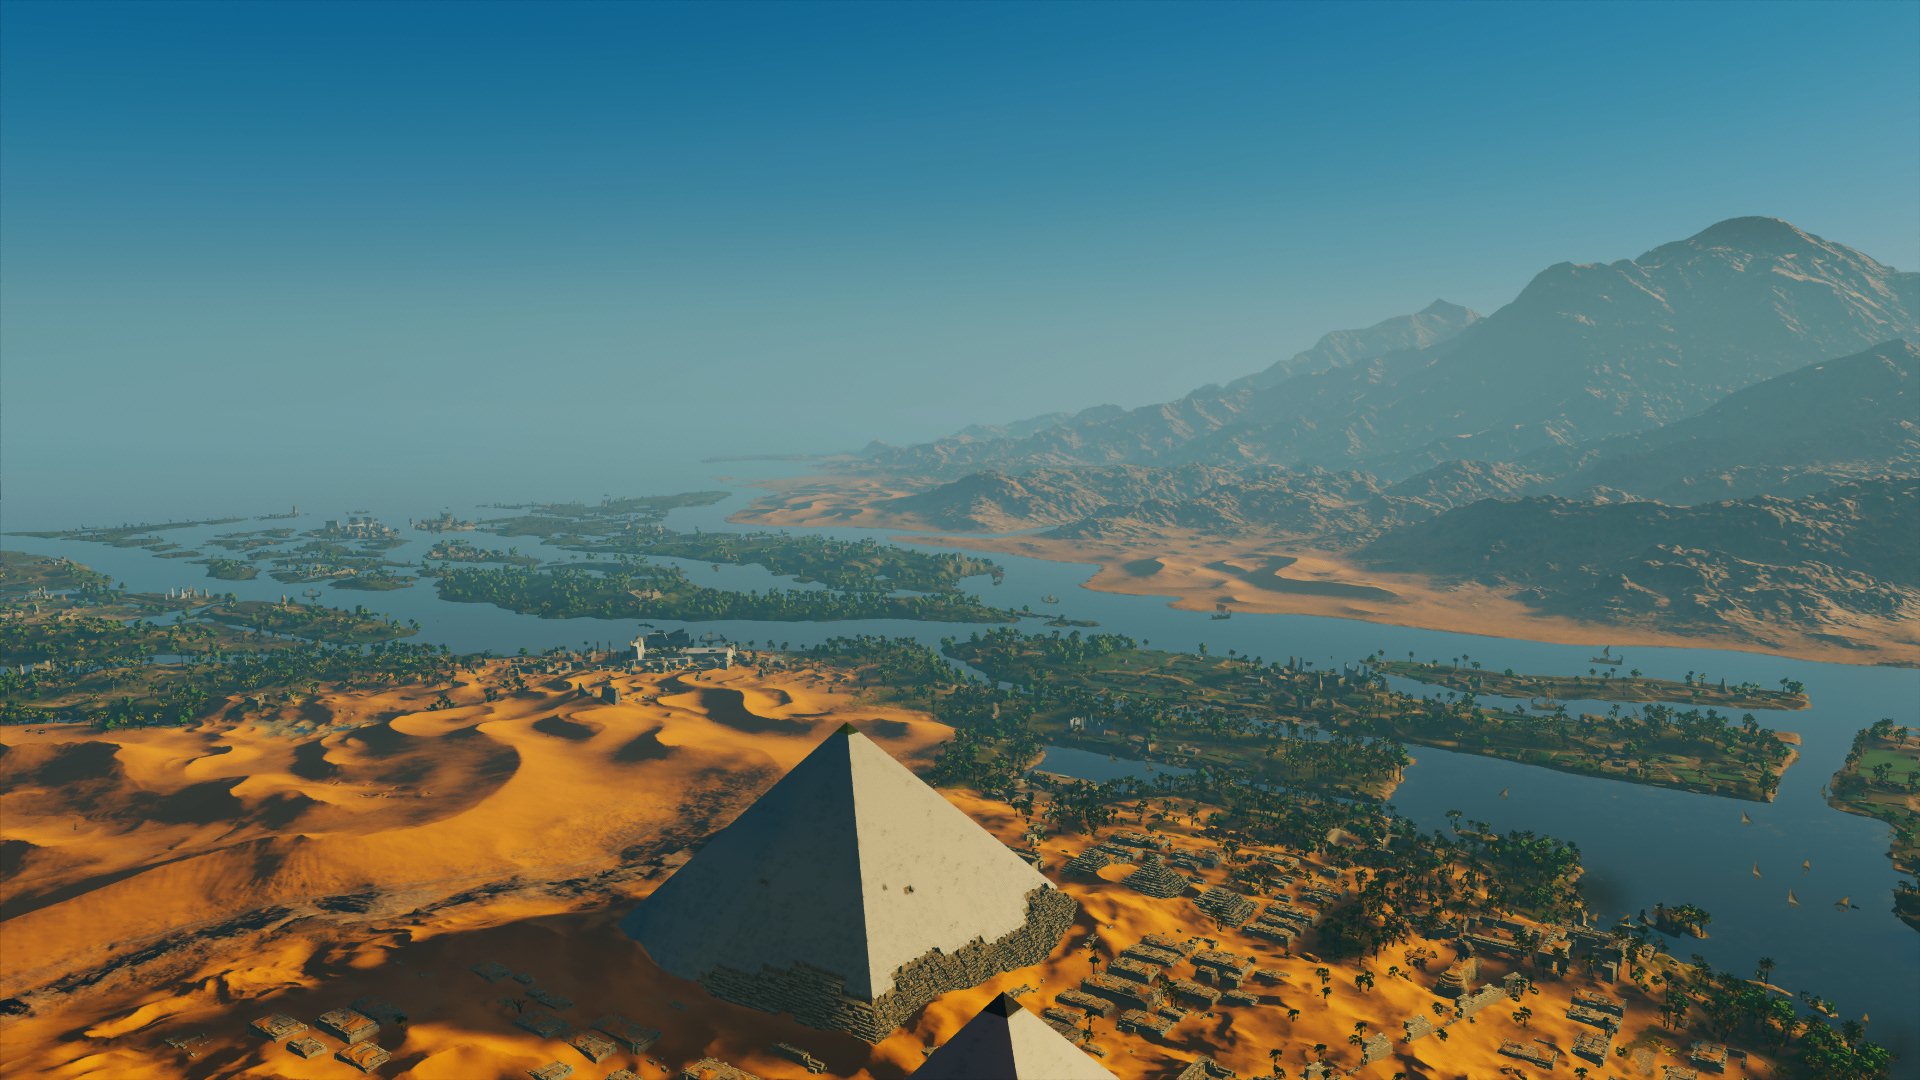 General 1920x1080 Assassin's Creed Assassin's Creed: Origins screen shot video games Ubisoft video game landscape